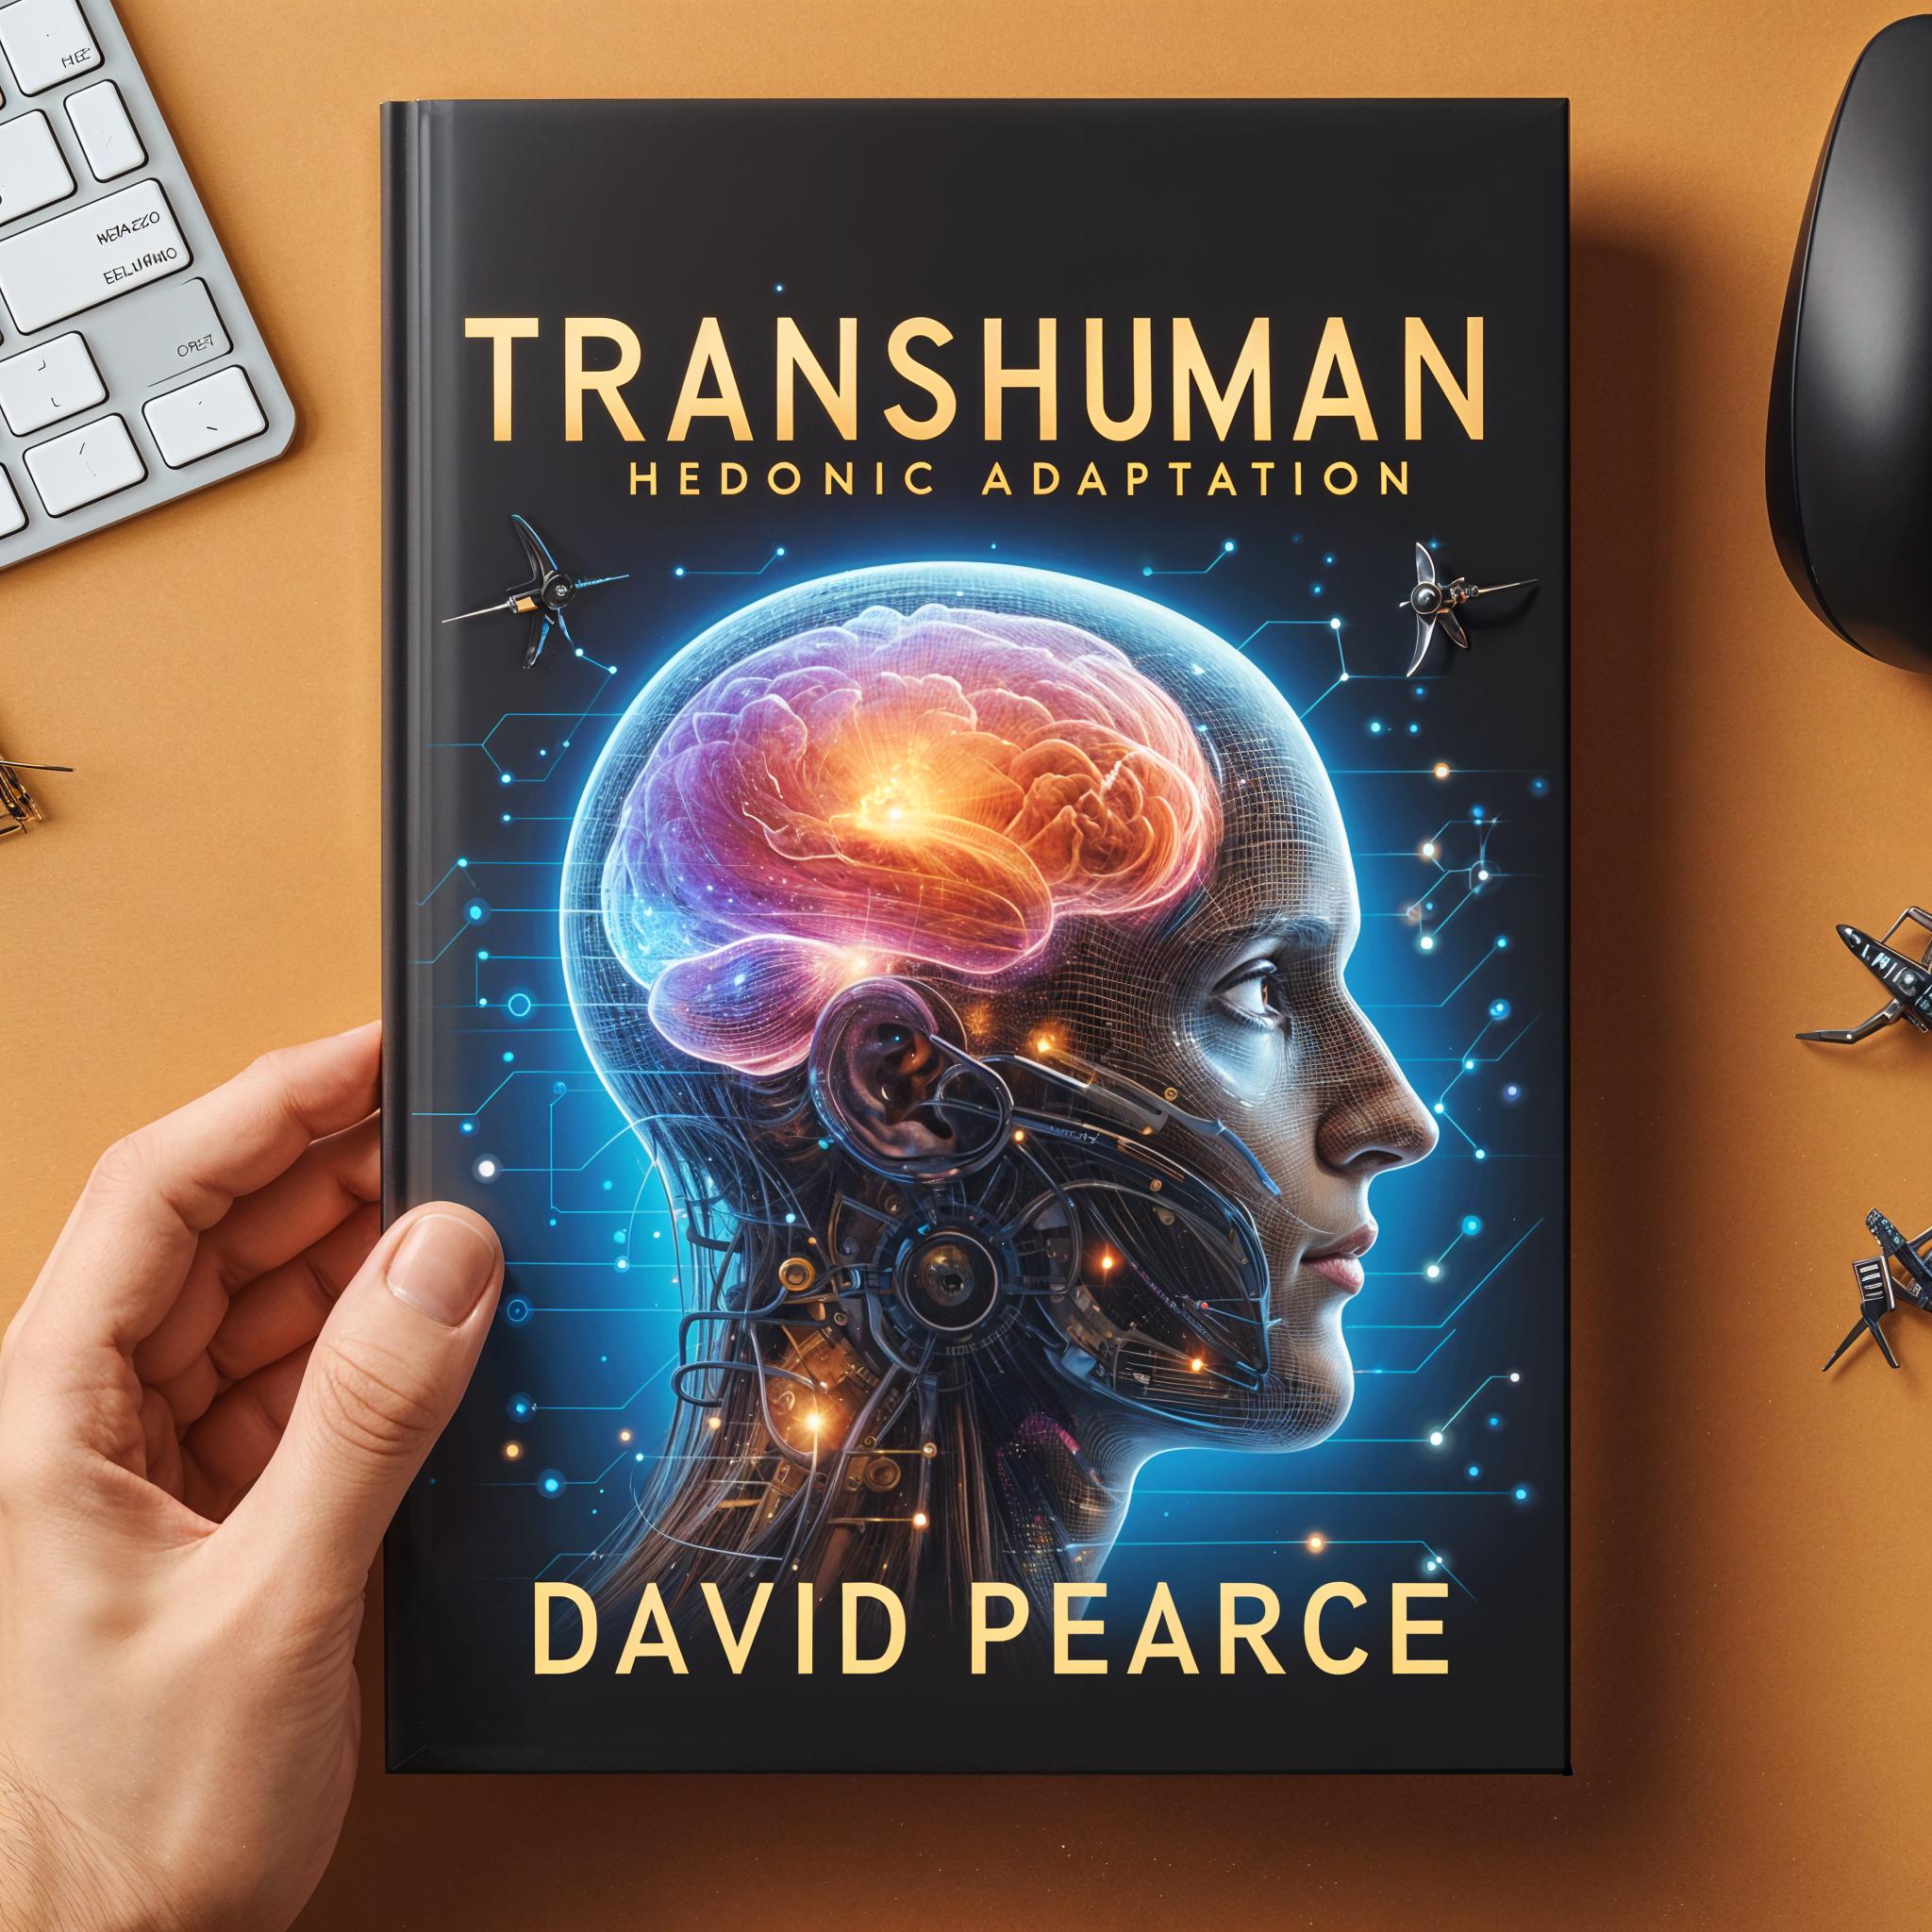 Transhuman Hedonic Adapation by David Pearce